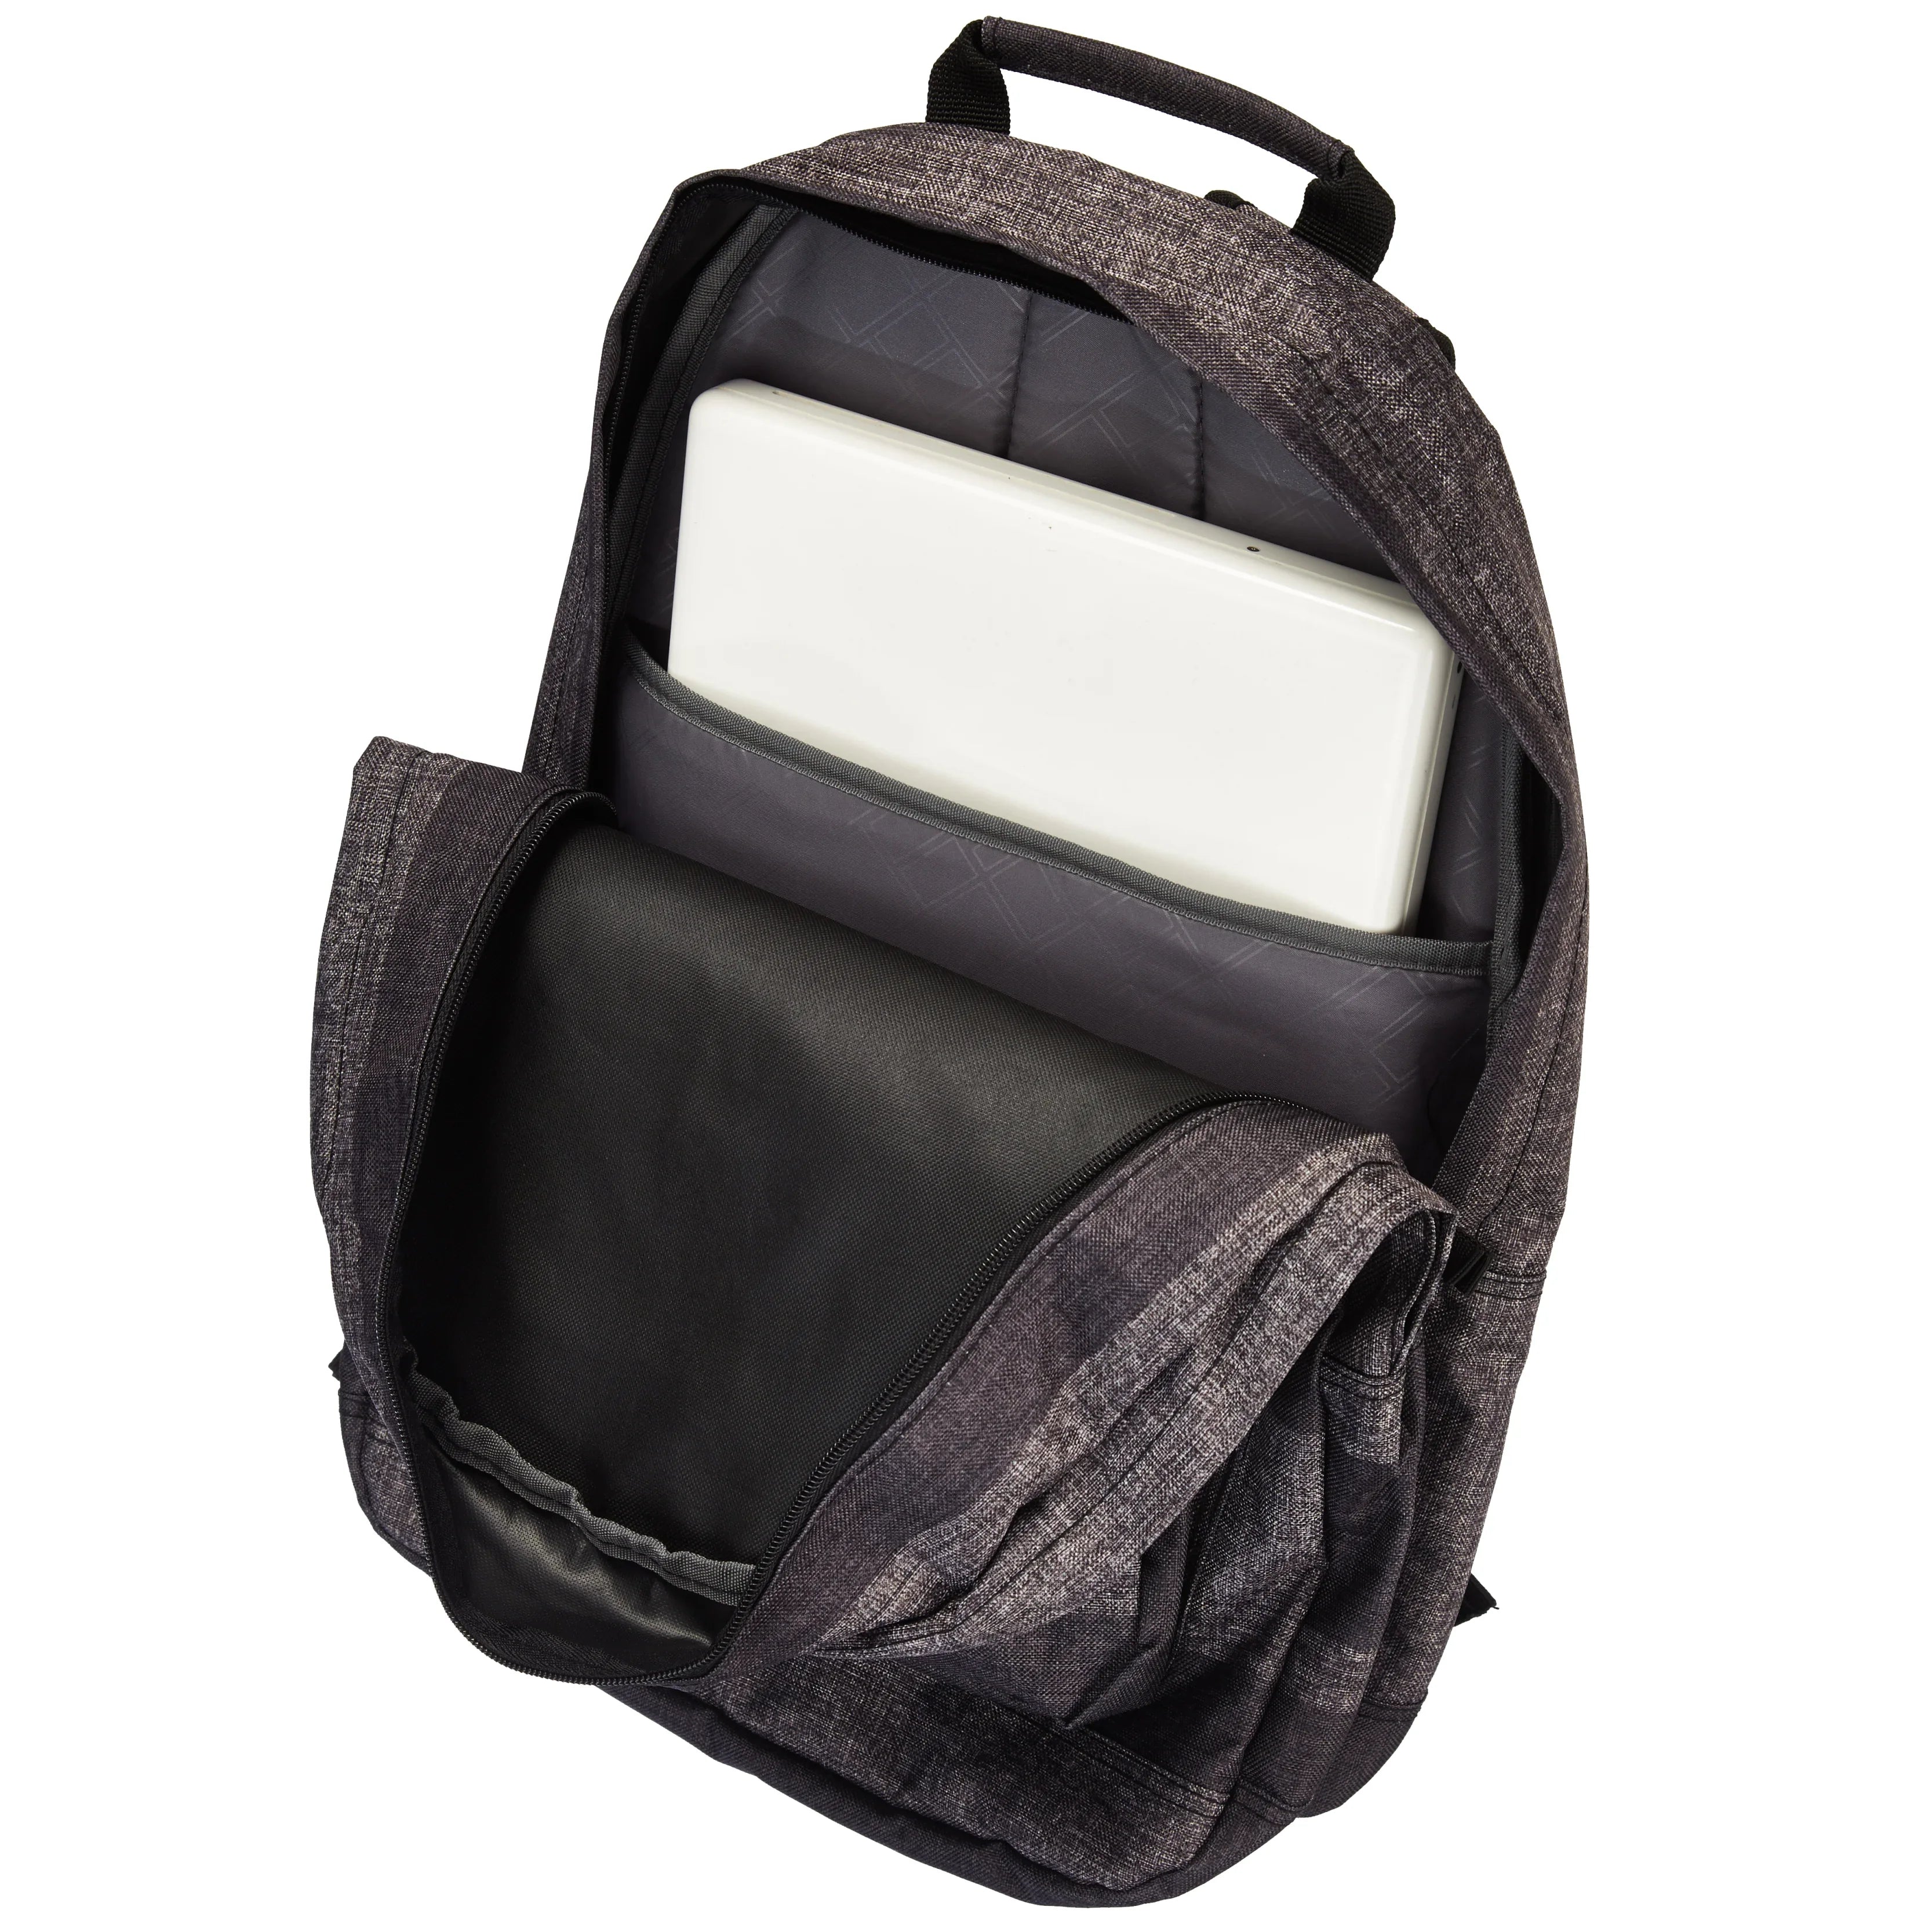 koffer-direkt.de Two Travel II Backpack 46 cm - gray flanel caro